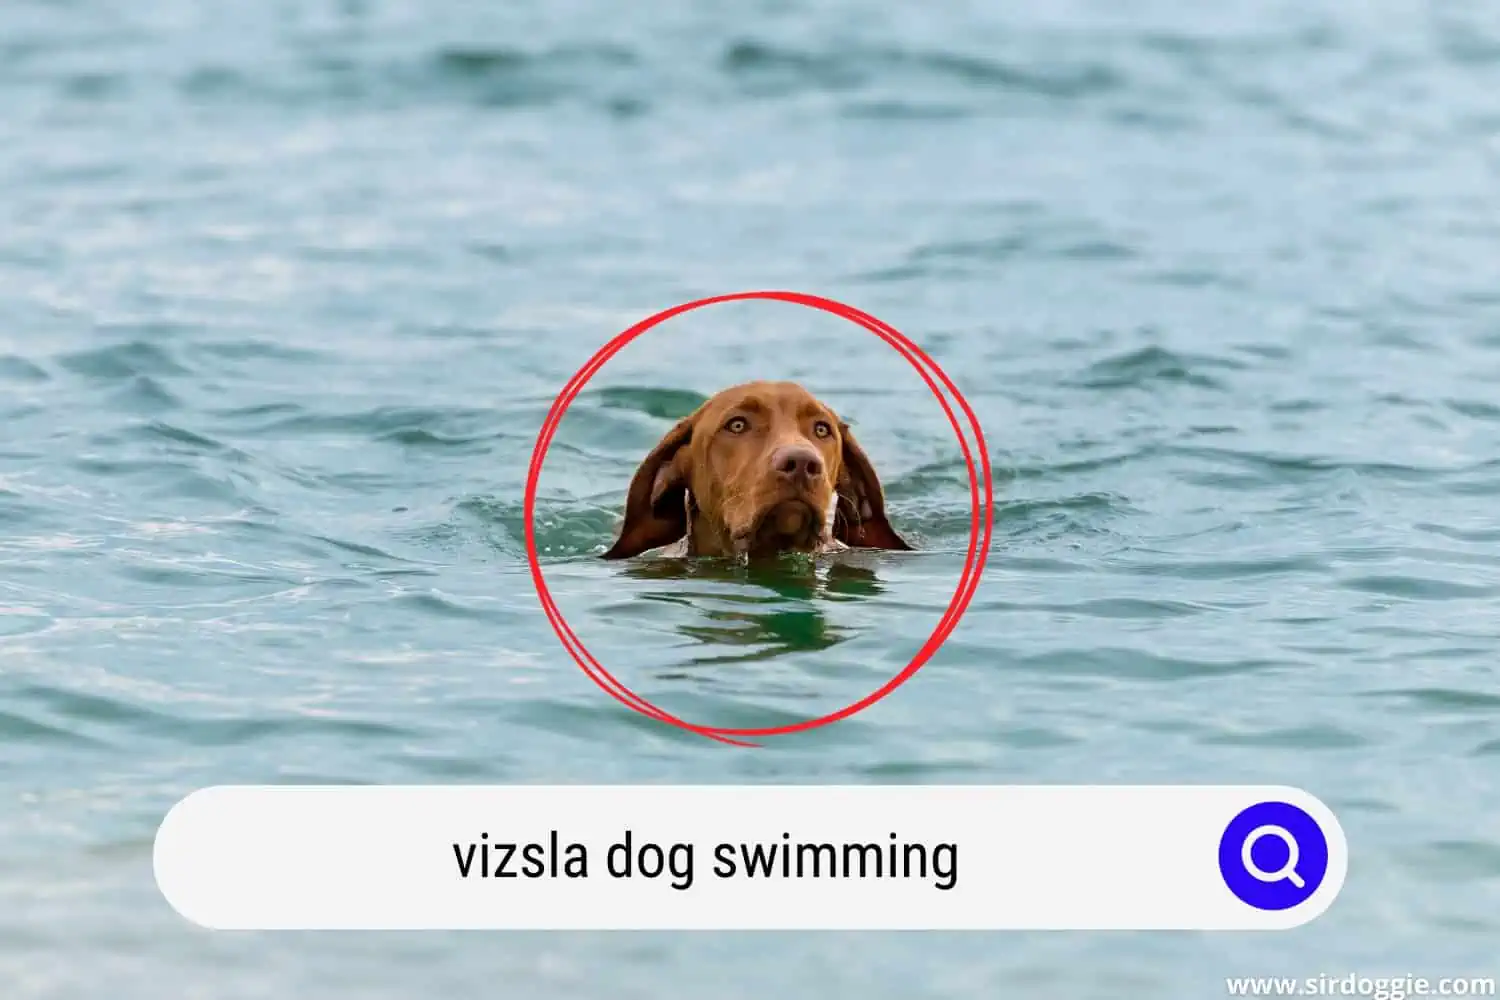 Vizsla dog swimming in the sea